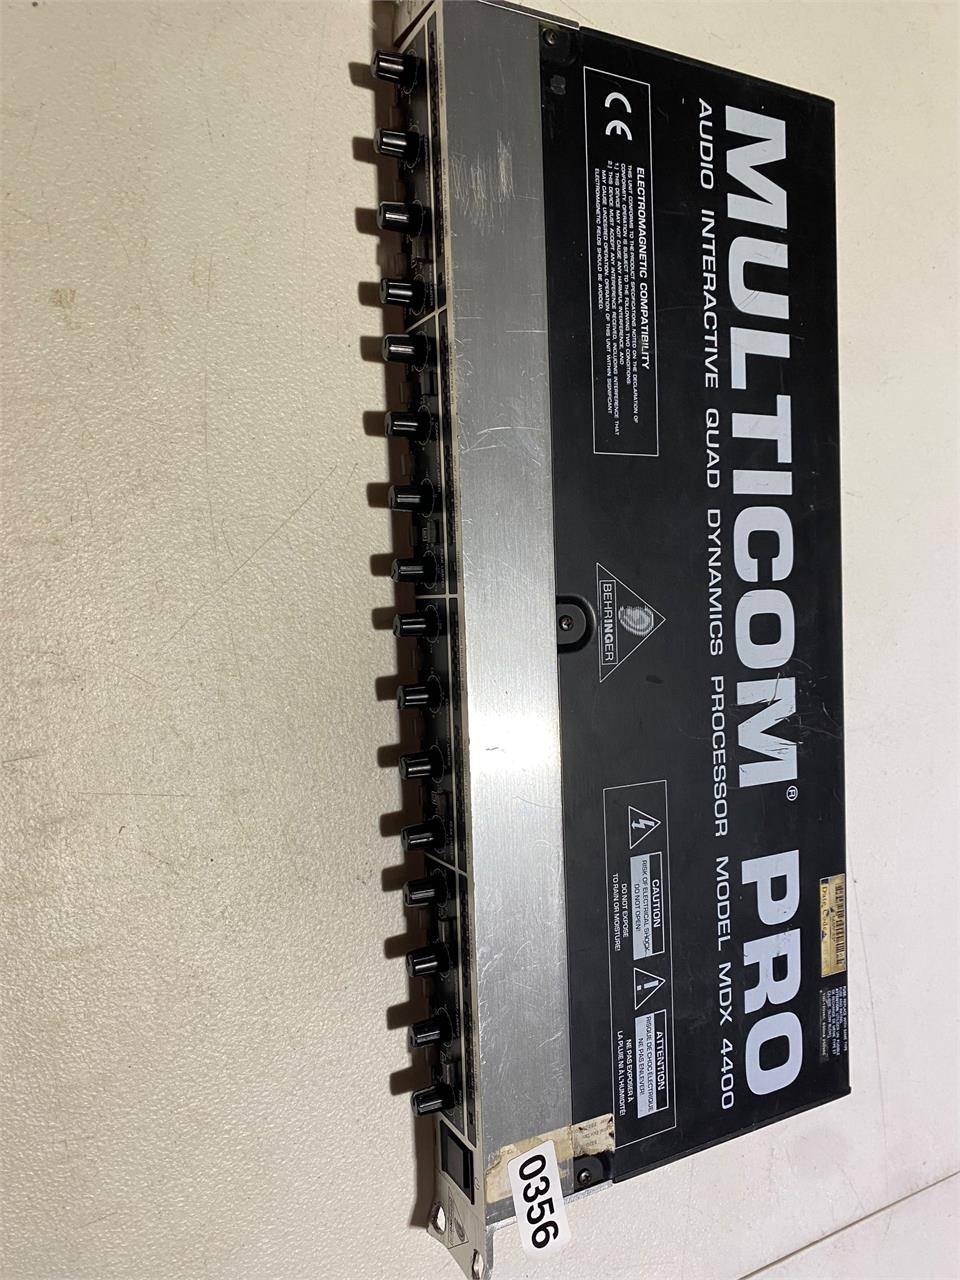 Multicom Pro model MDX4400